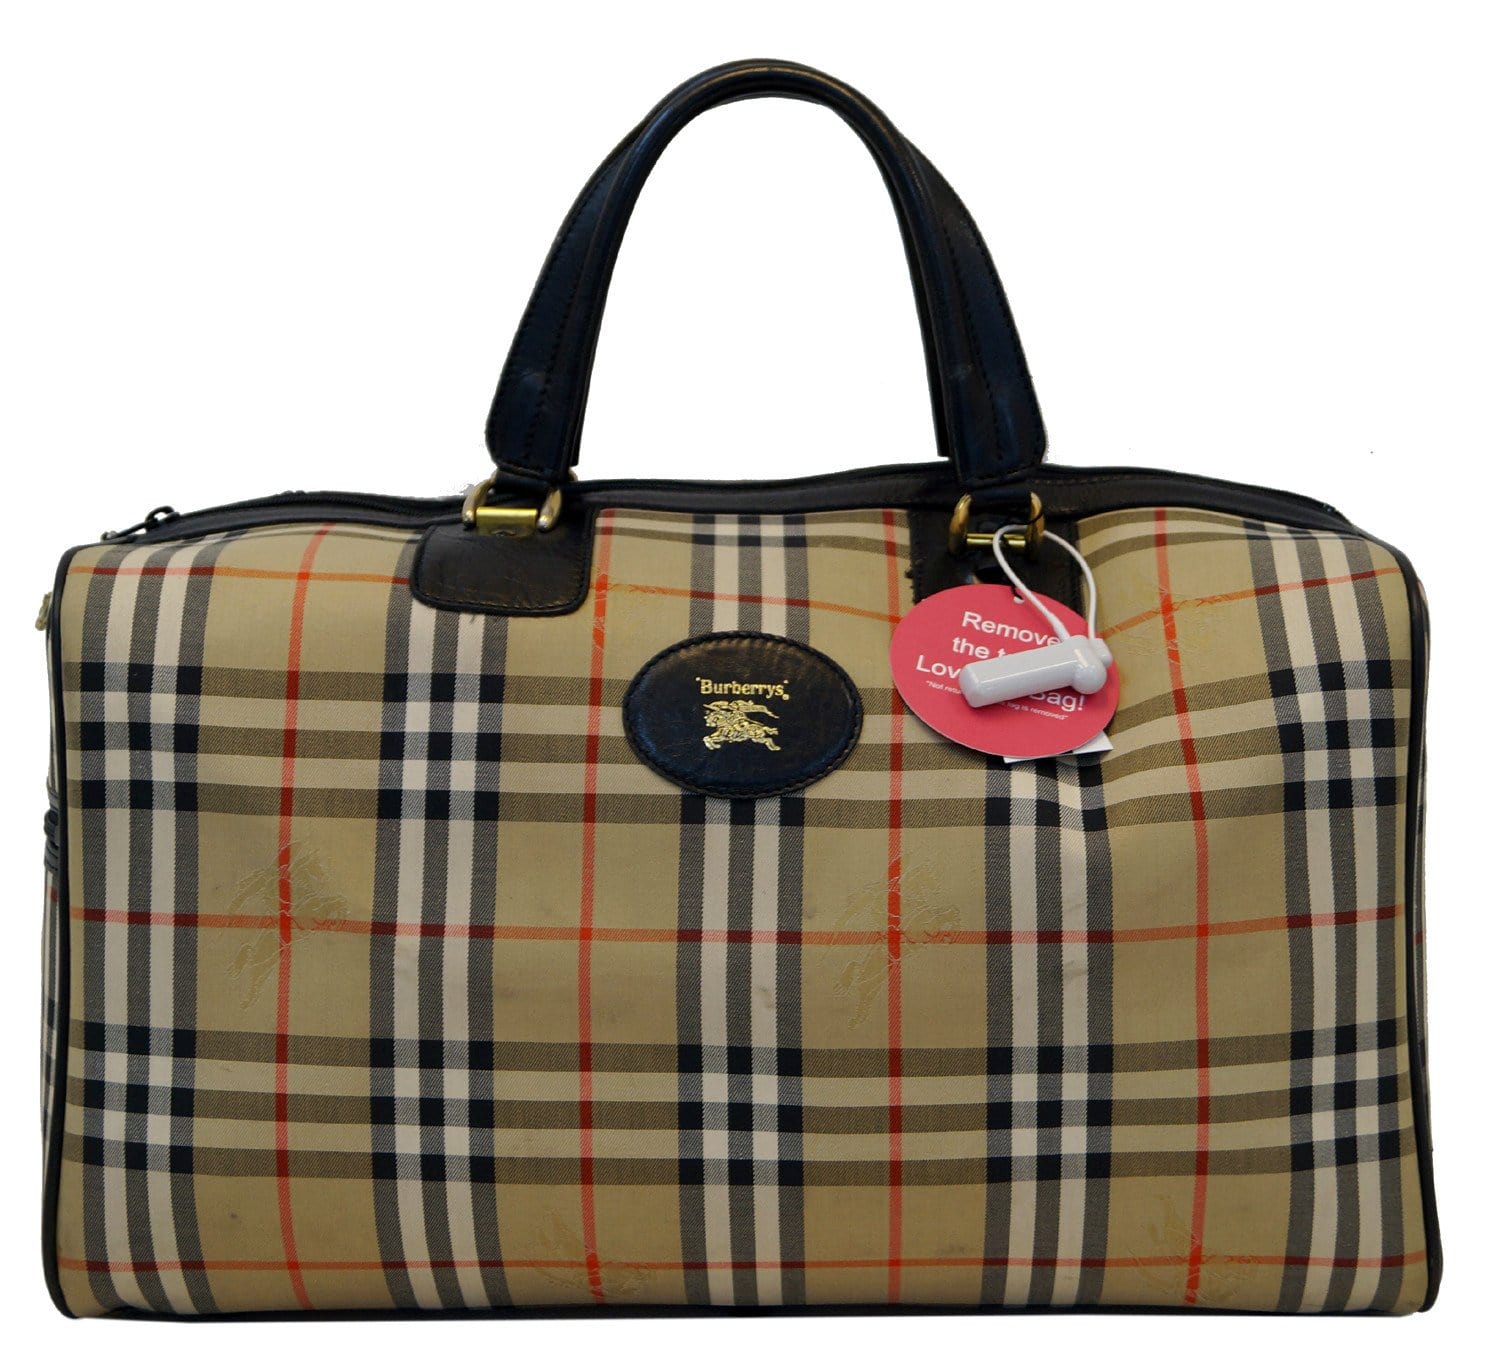 Vintage Burberry classic beige nova check fabric handbag with black leather  trimmings. Classic Burberry bag. Large bag. Unisex. 0409051